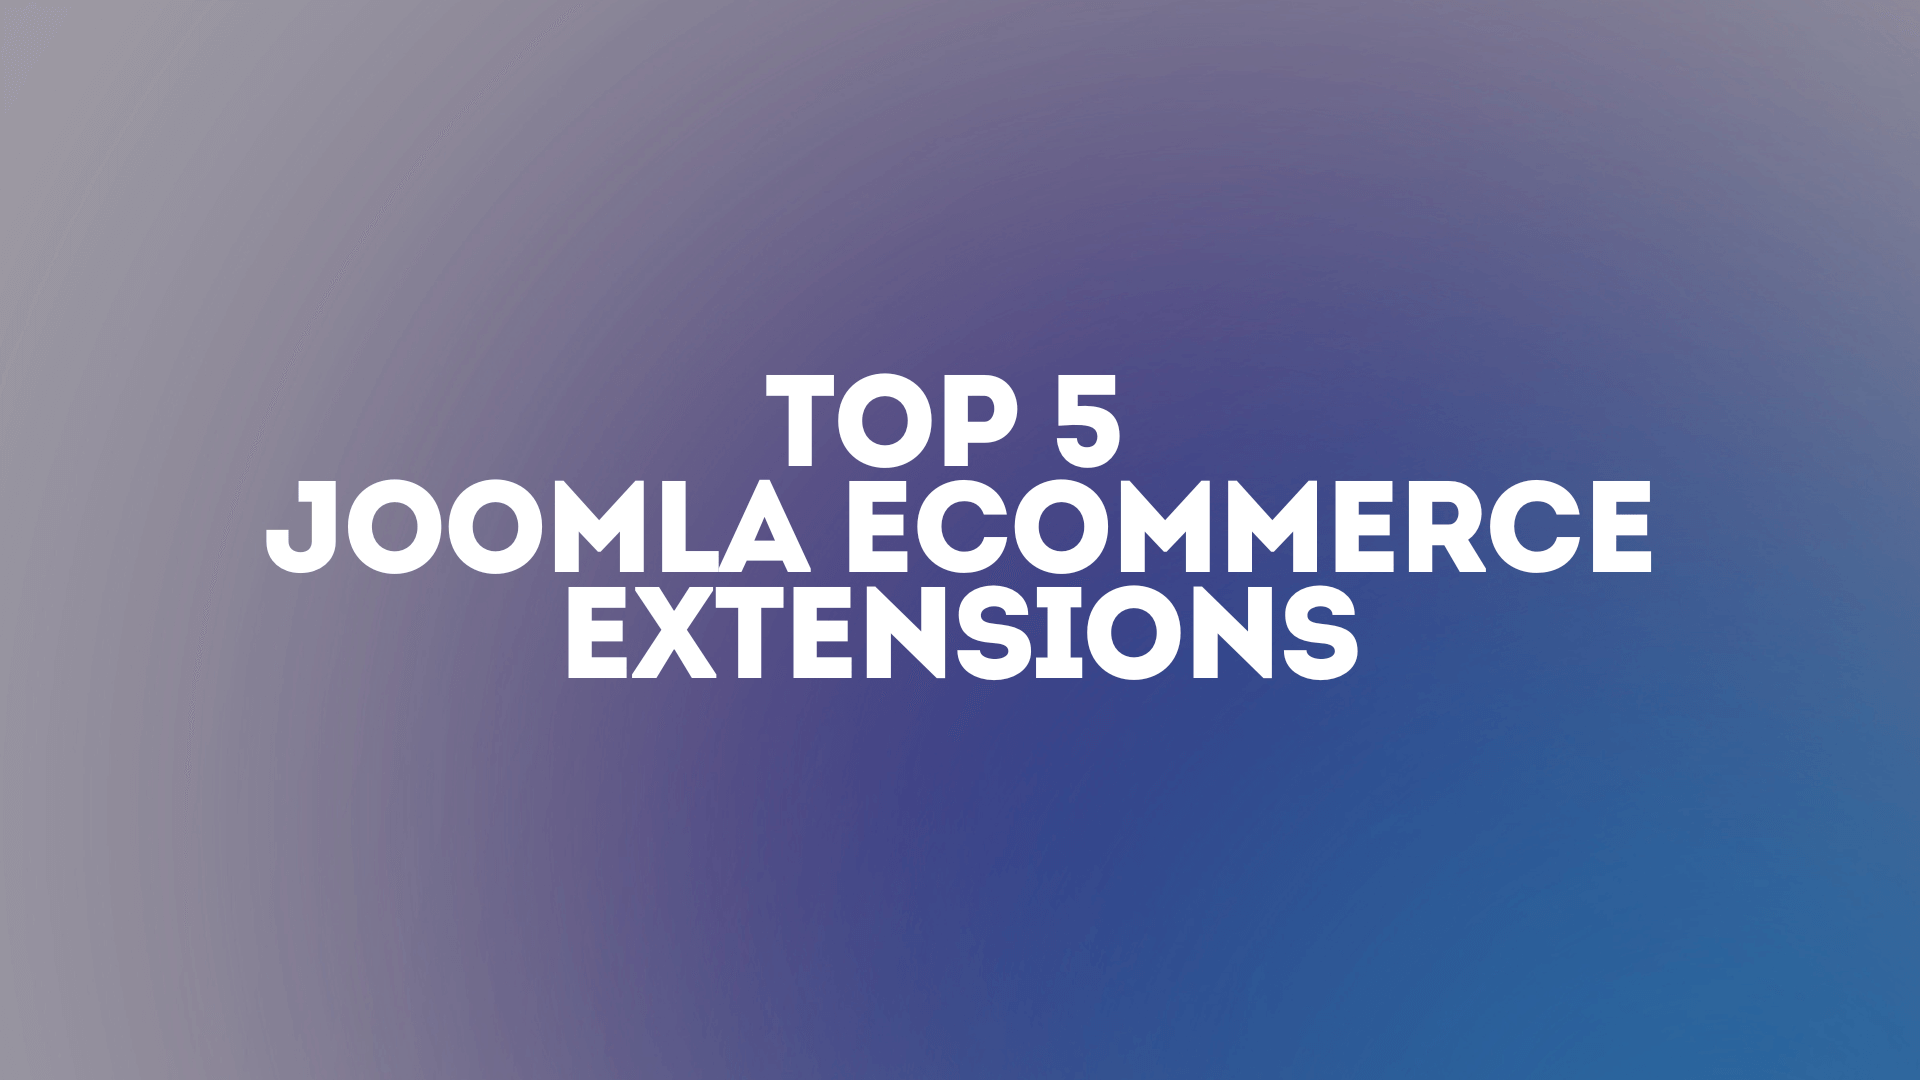 Joomla News: Top 5 eCommerce Extensions for Joomla